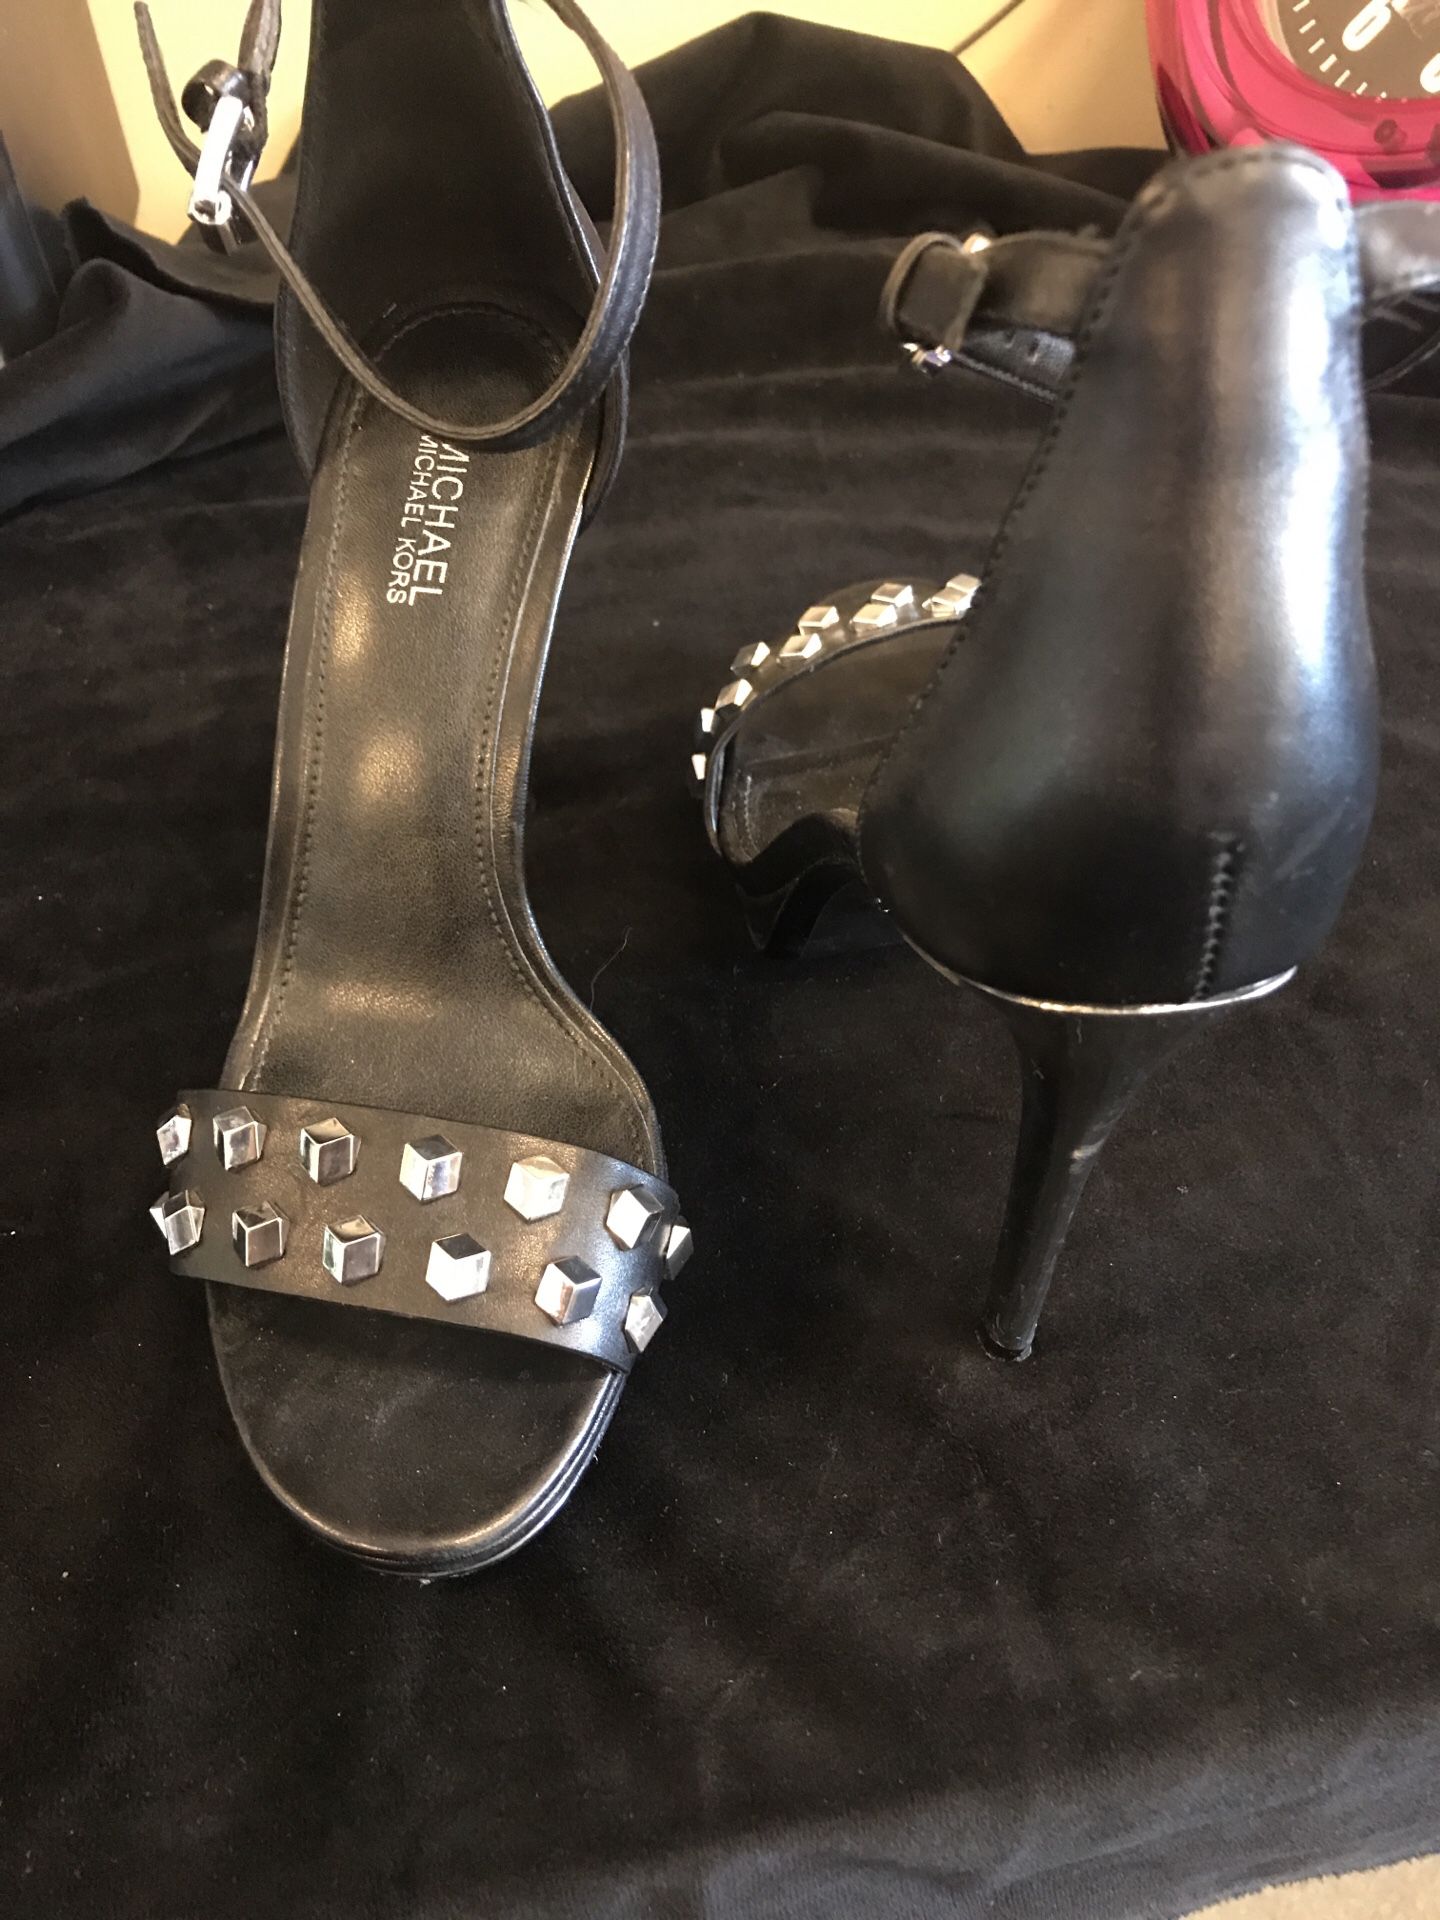 Michael Kors high heels shoes 6M